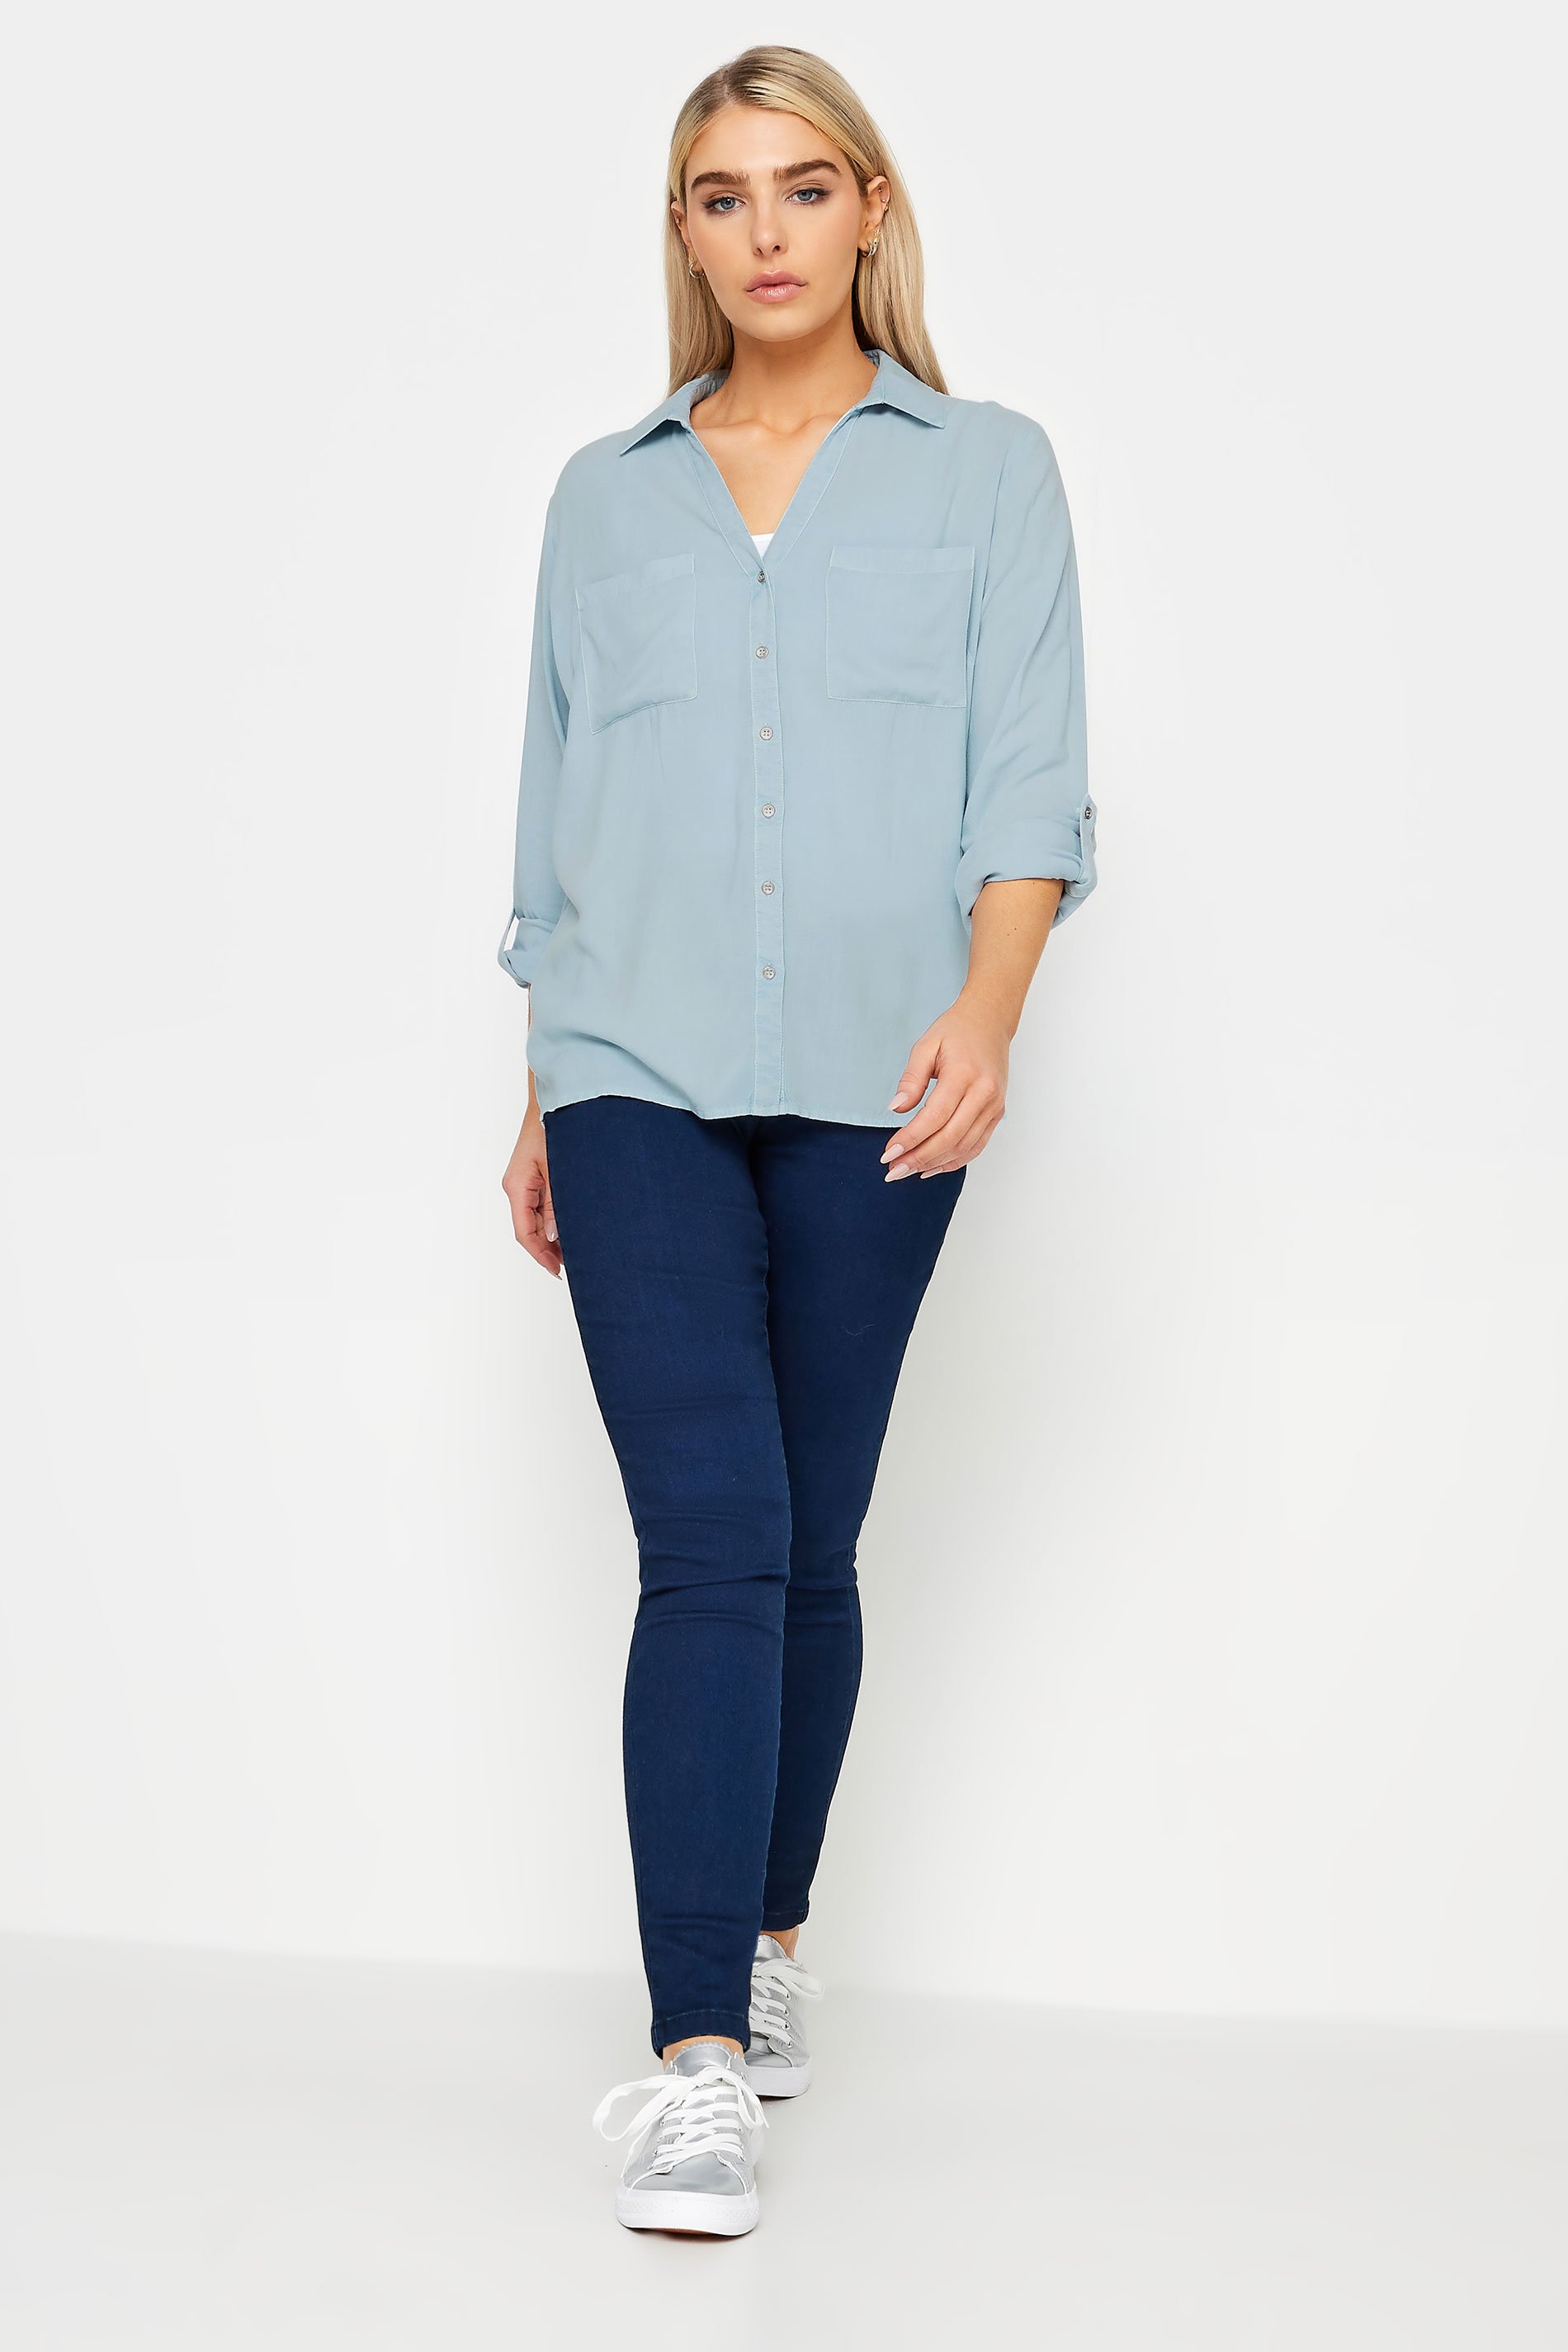 M&Co Blue Button Up Long Sleeve Shirt | M&Co 2